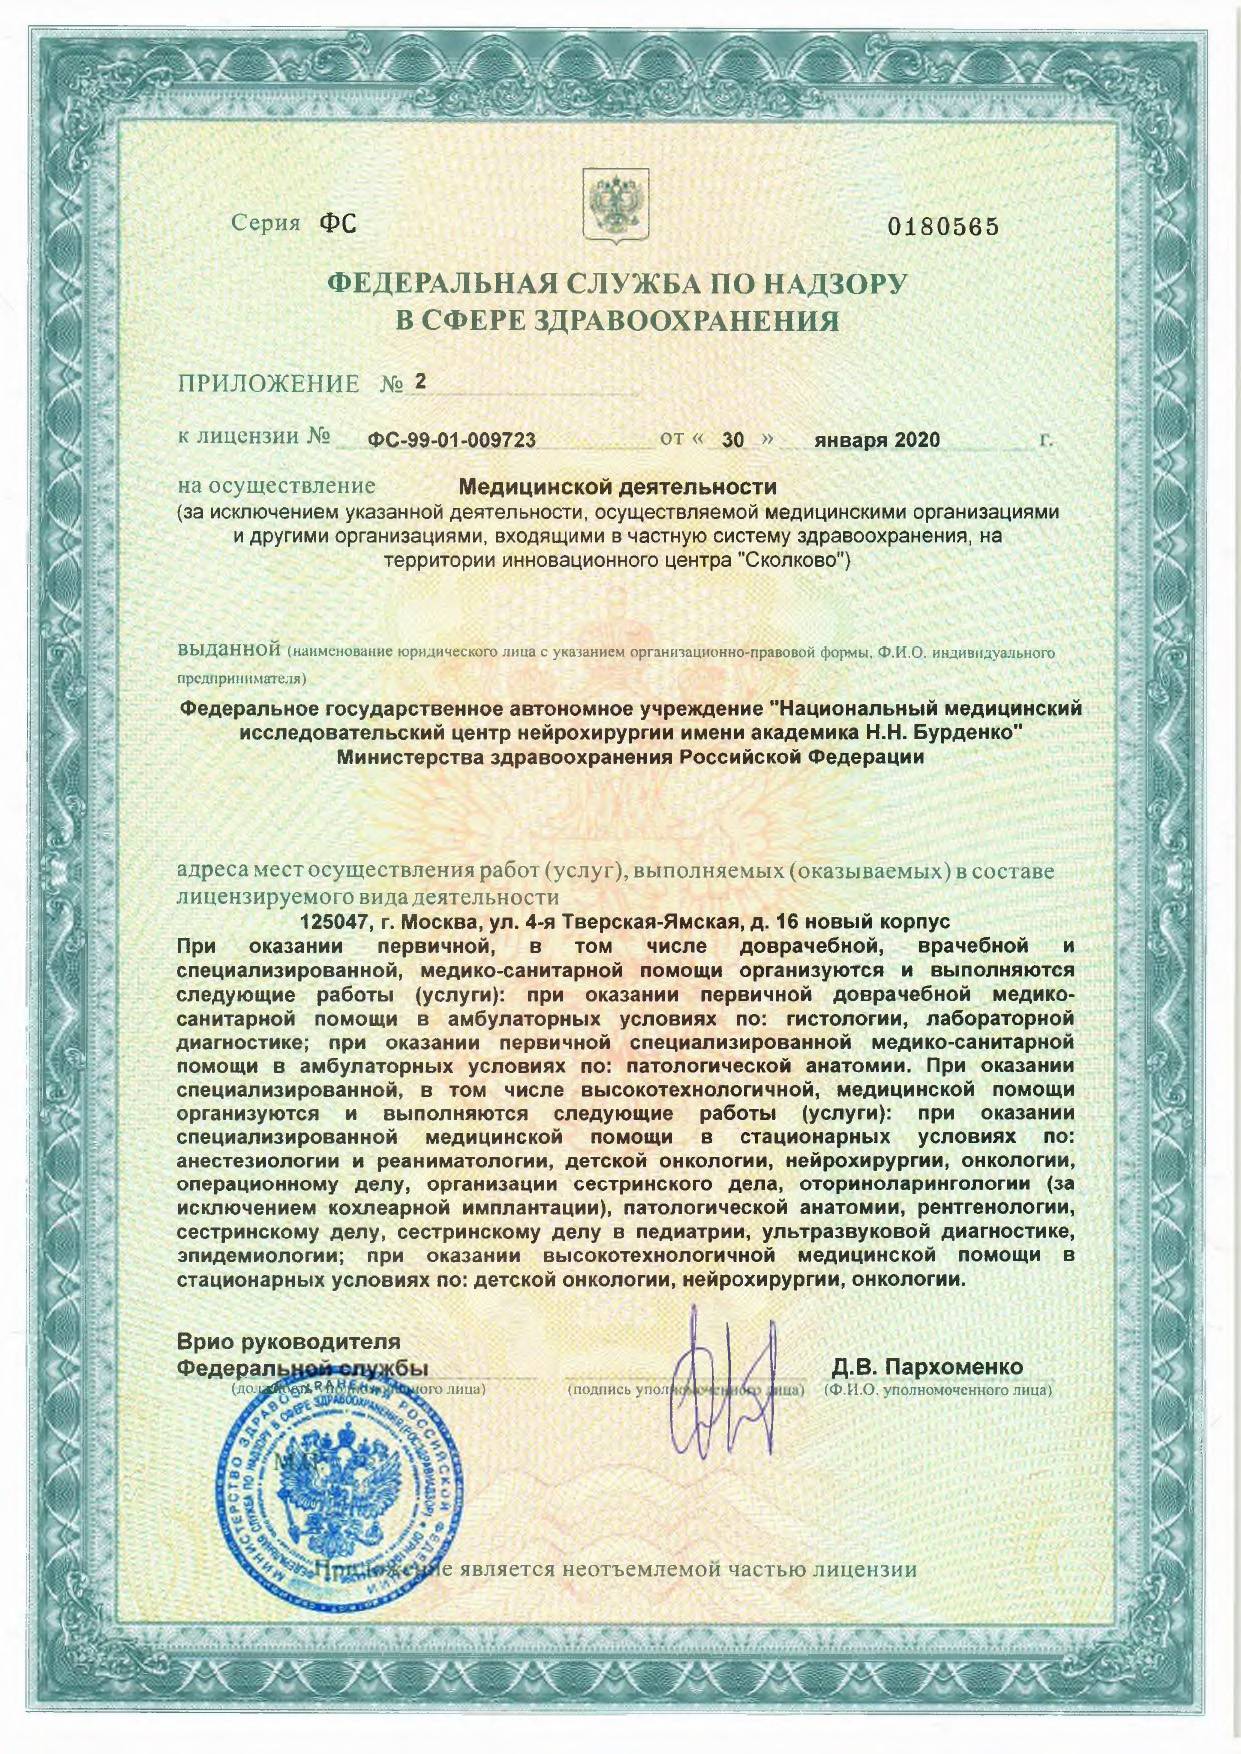 Институт нейрохирургии имени академика Н. Н. Бурденко лицензия №5